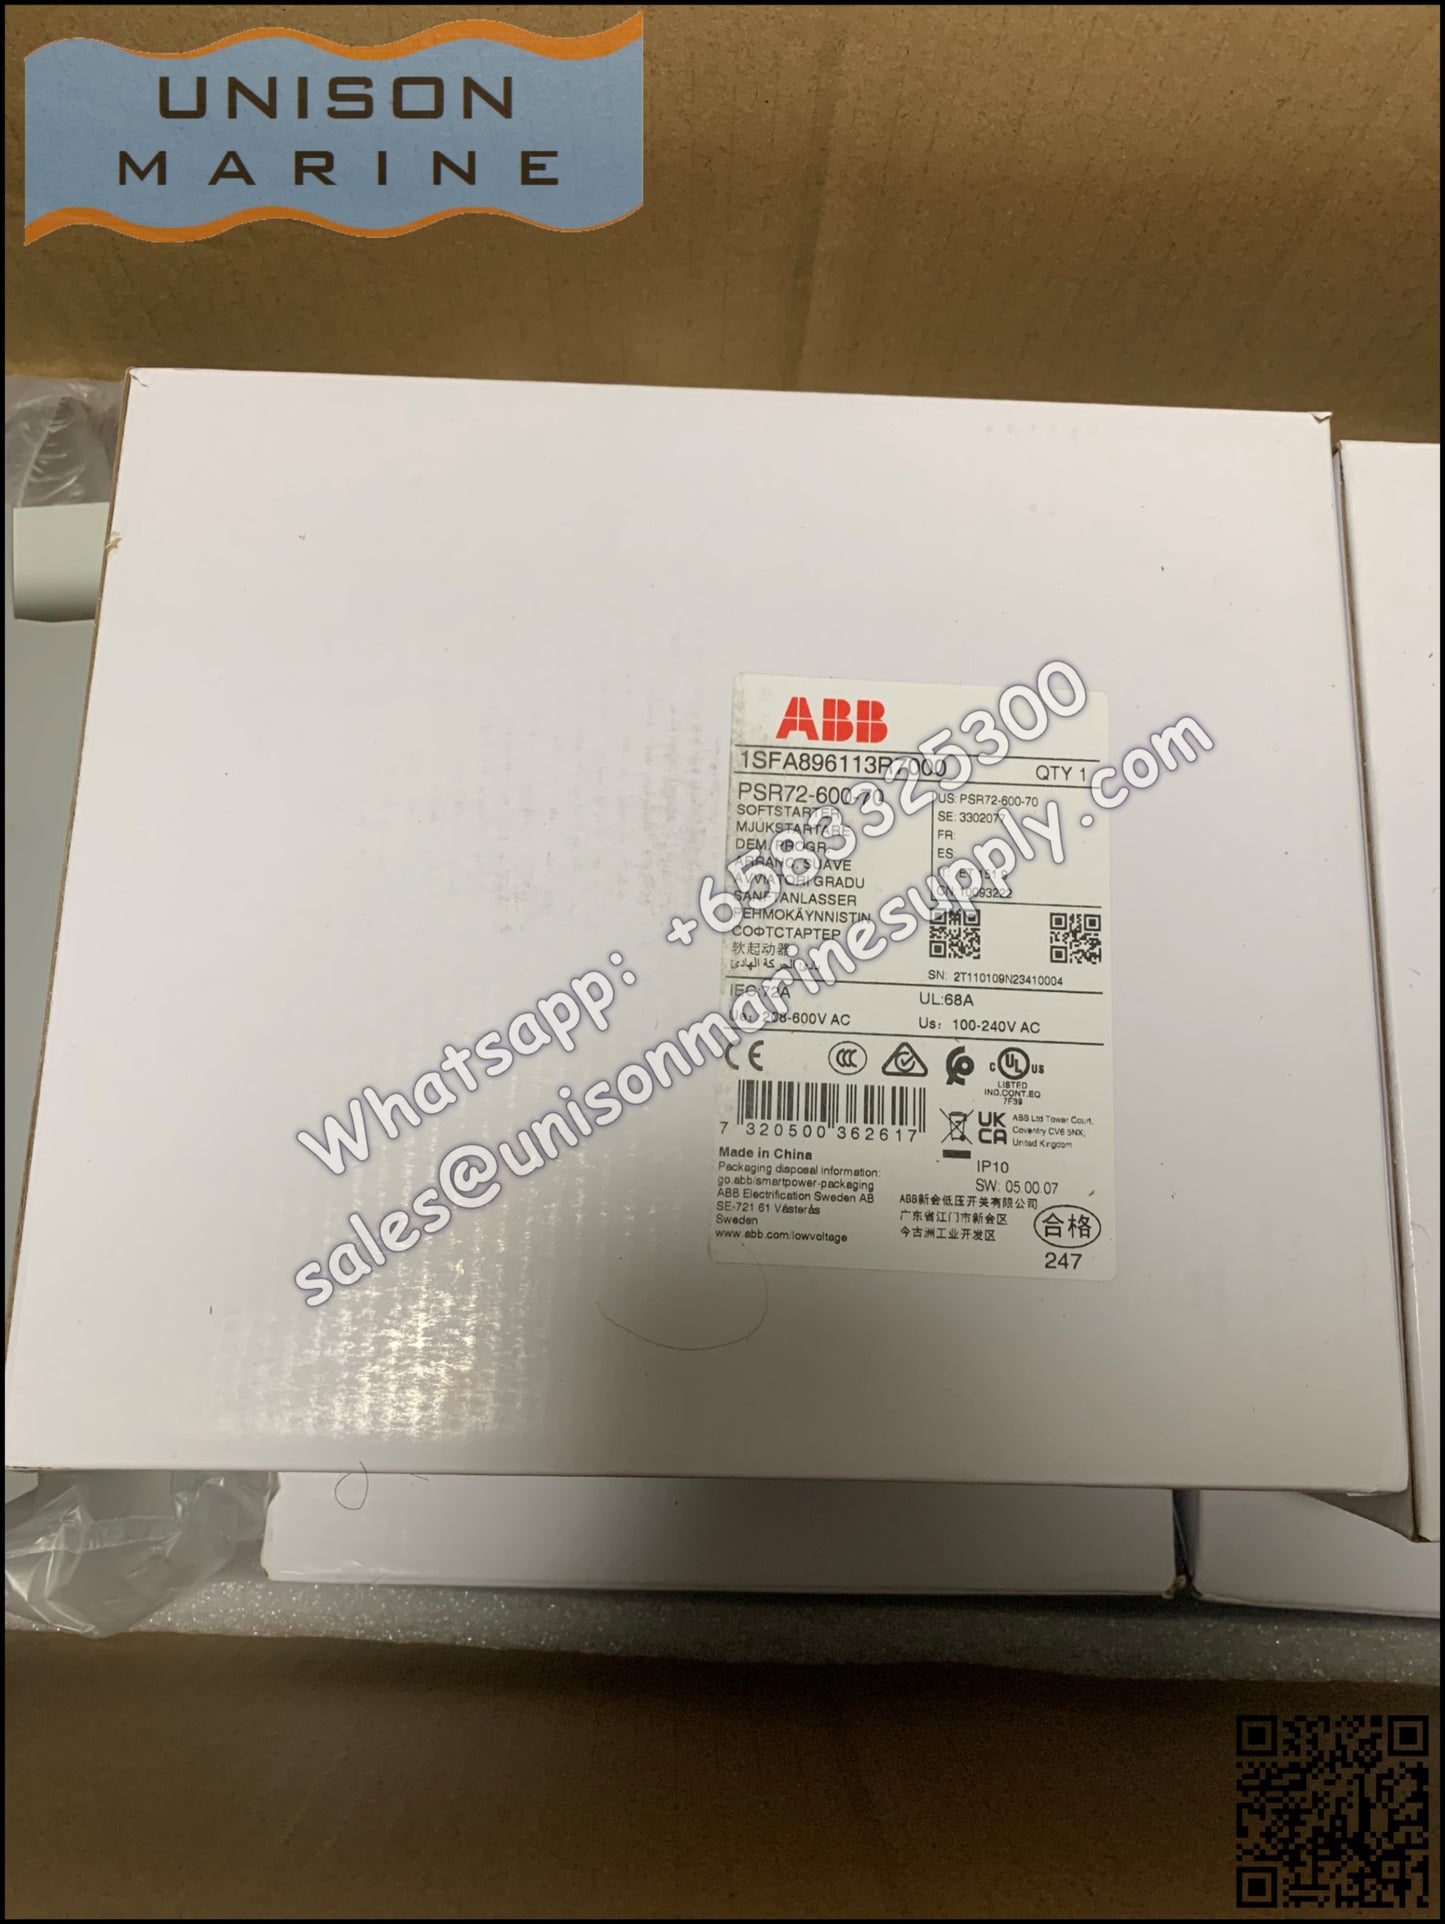 ABB PSR Softstarter PSR72-600-70 / PSR72-600-11